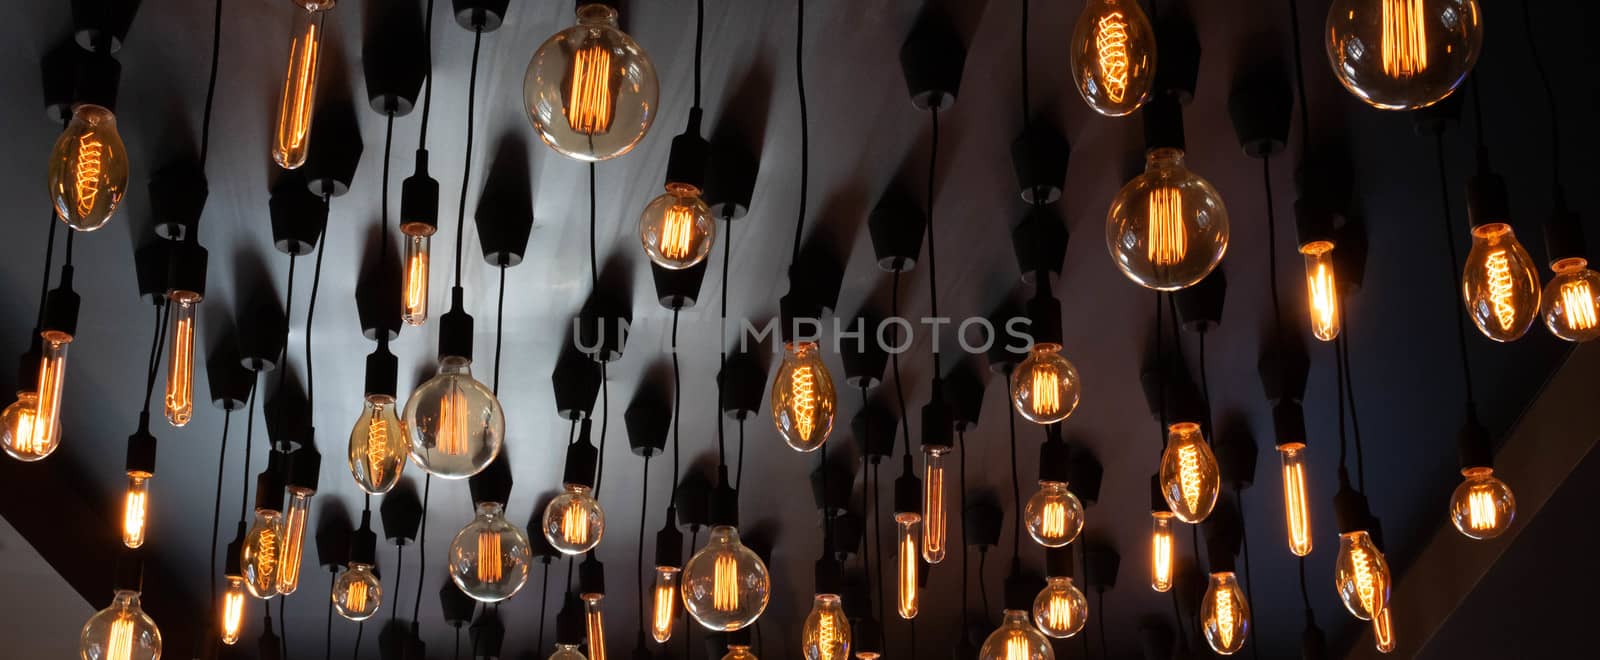 Retro Edison lamp on a black background of the ceiling. Concept idea by lapushka62